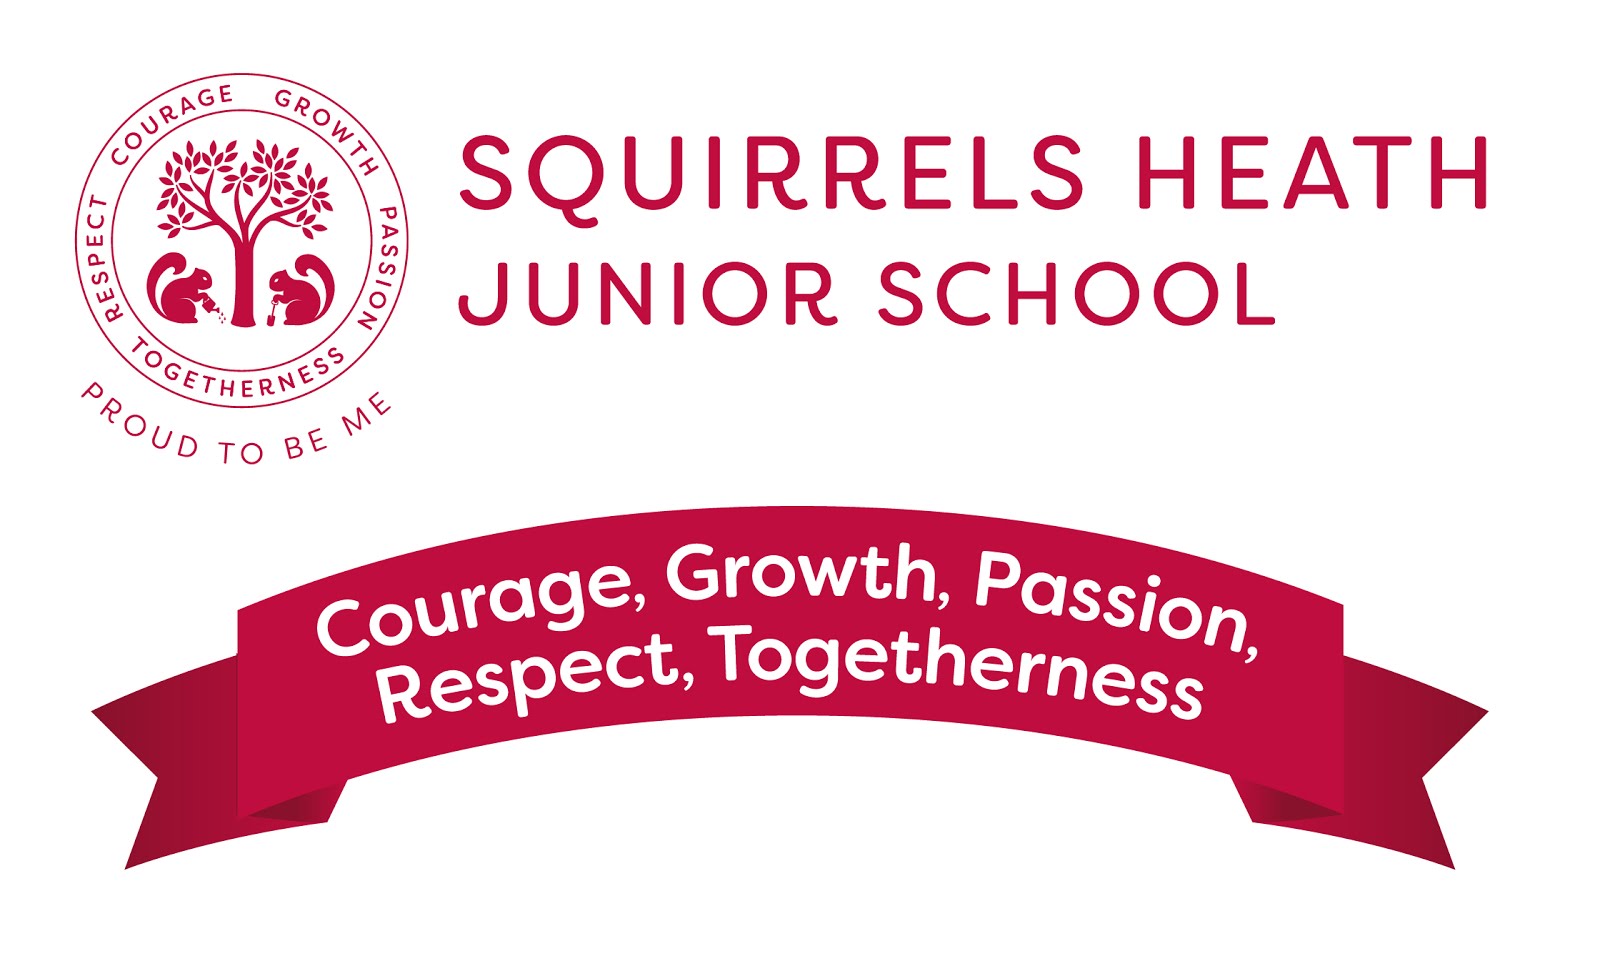 Squirrels Heath Junior School